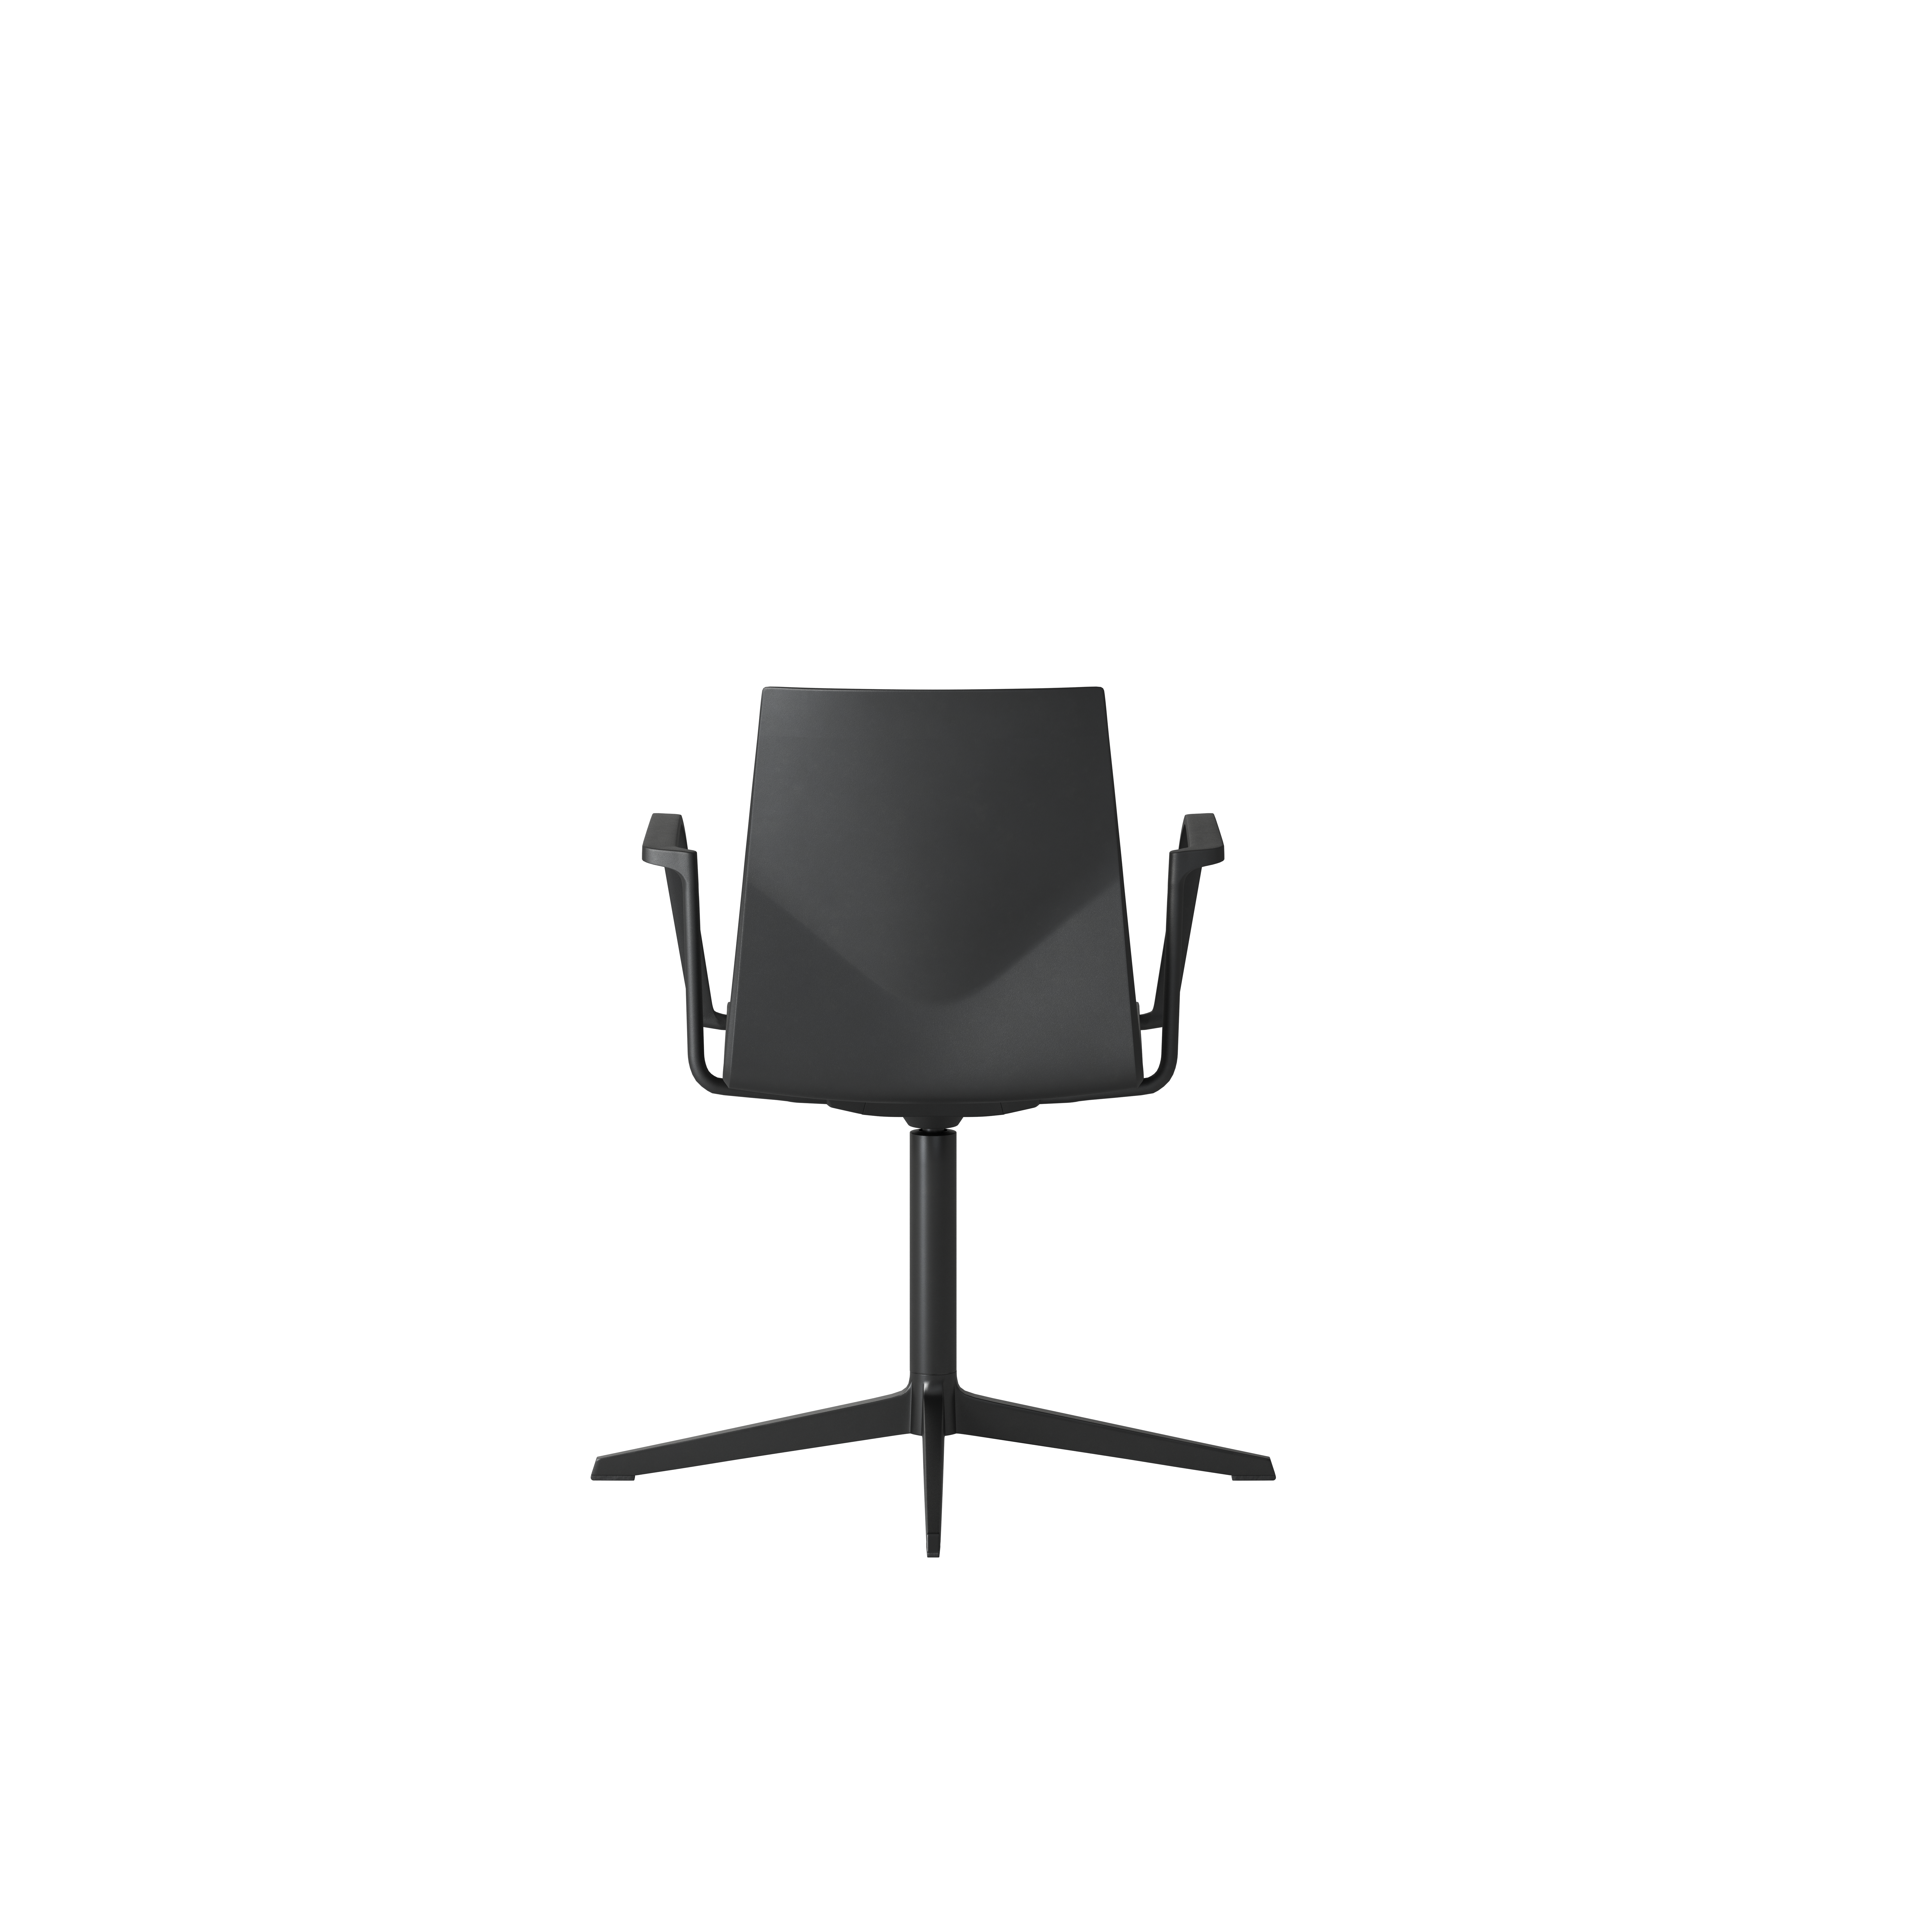 OCEE&FOUR – Chairs – FourCast 2 Evo – Plastic shell - Loop Armrest - Swivel - Packshot Image 4